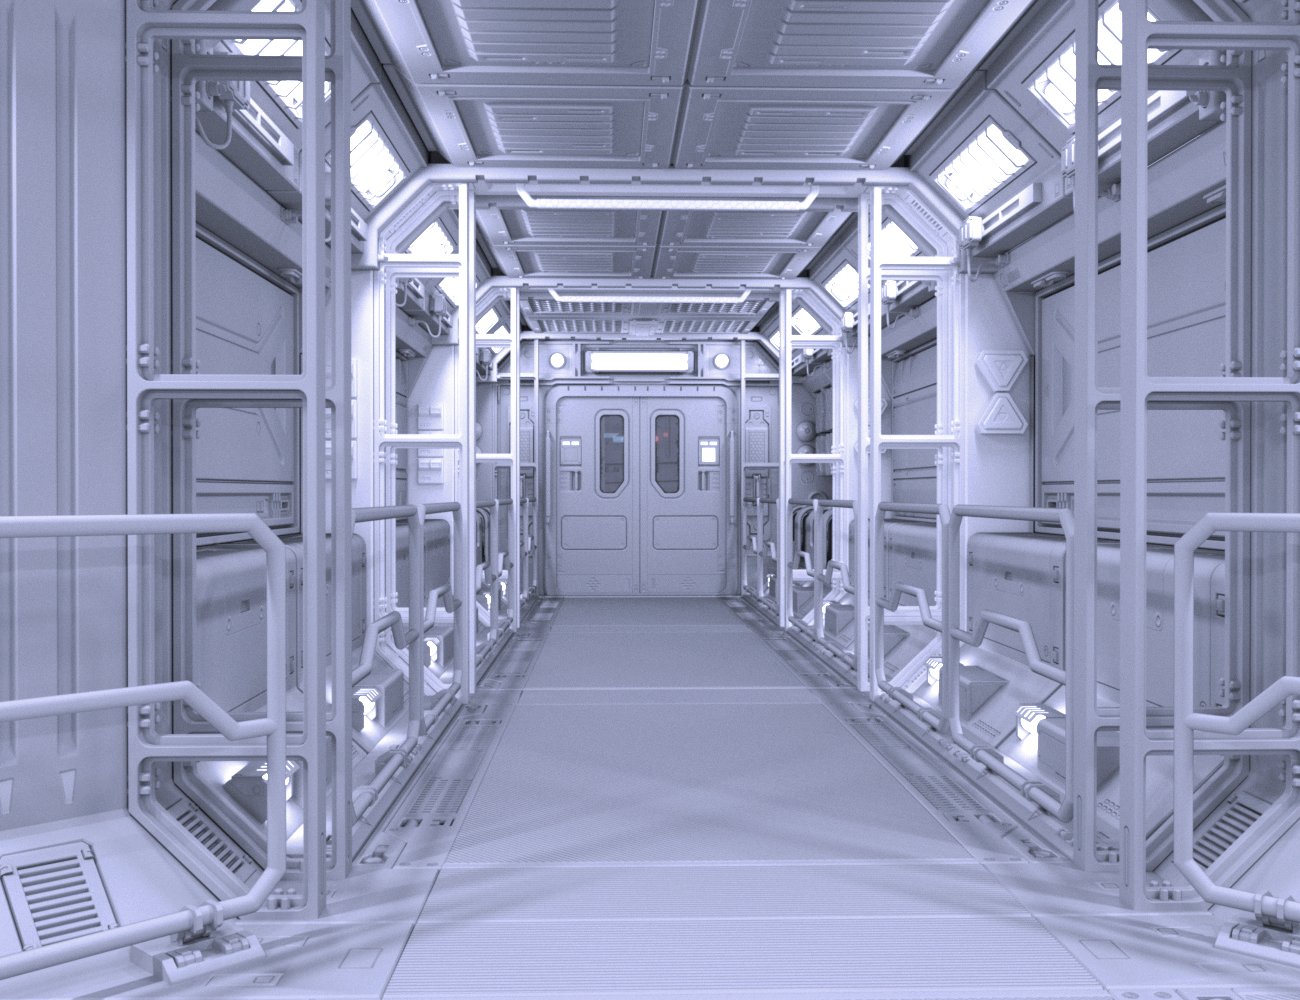 Solaris Corridor by: petipet, 3D Models by Daz 3D